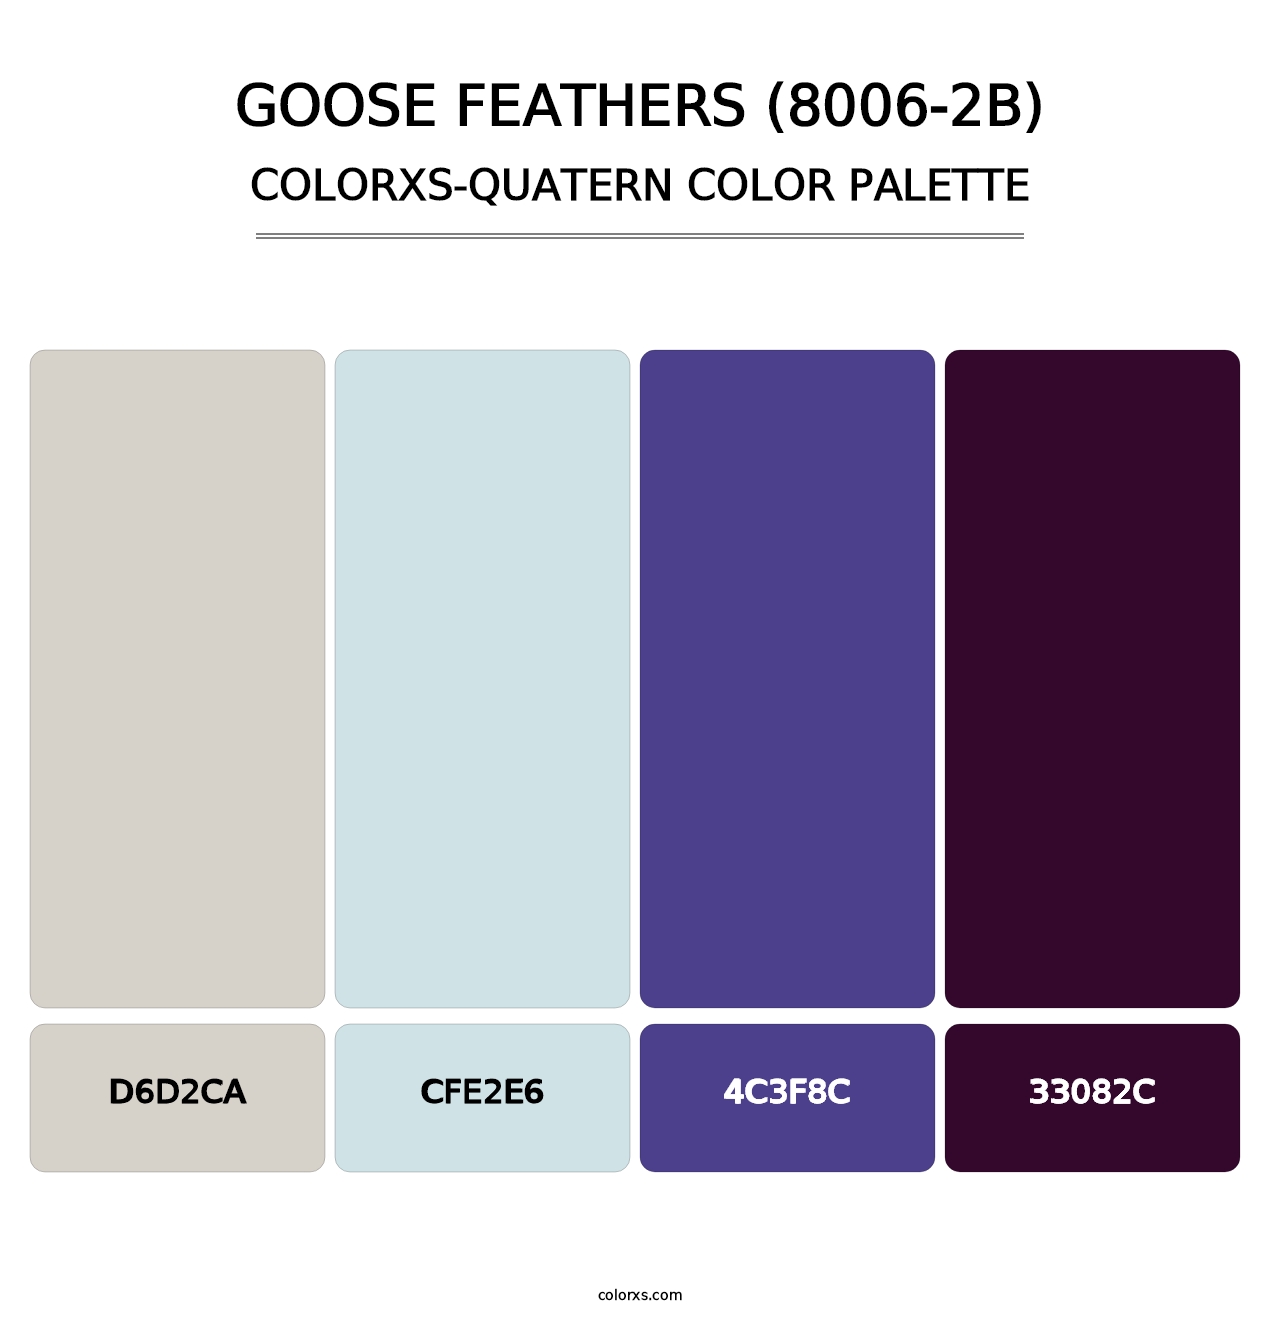 Goose Feathers (8006-2B) - Colorxs Quatern Palette